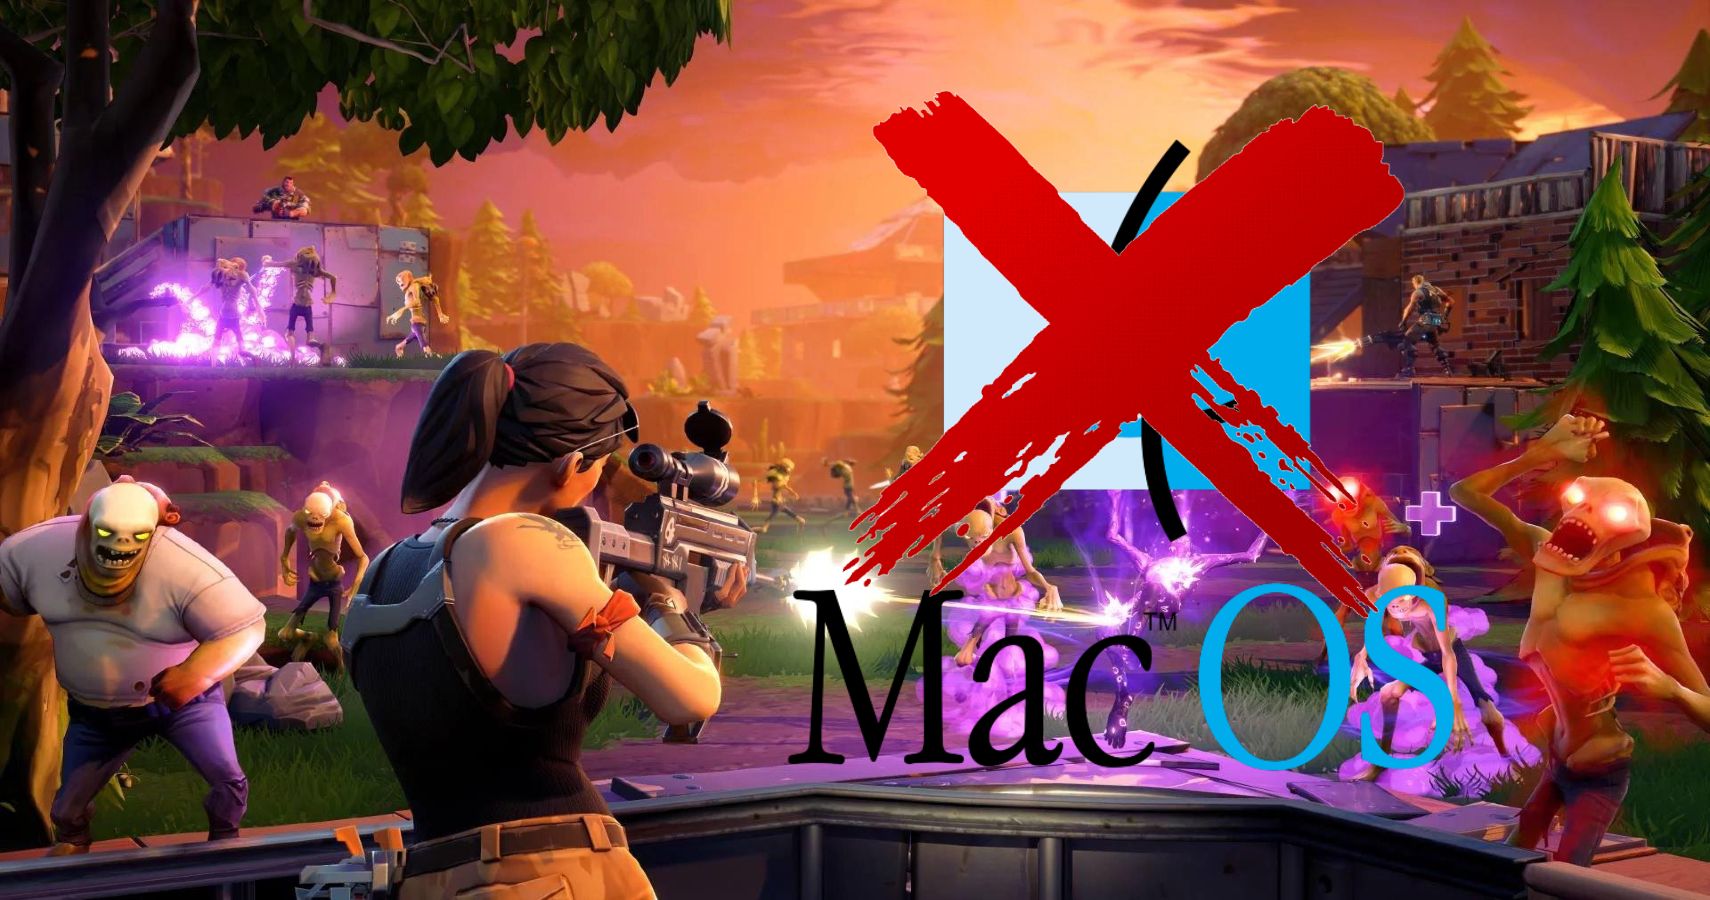 brace for impact epic games mac